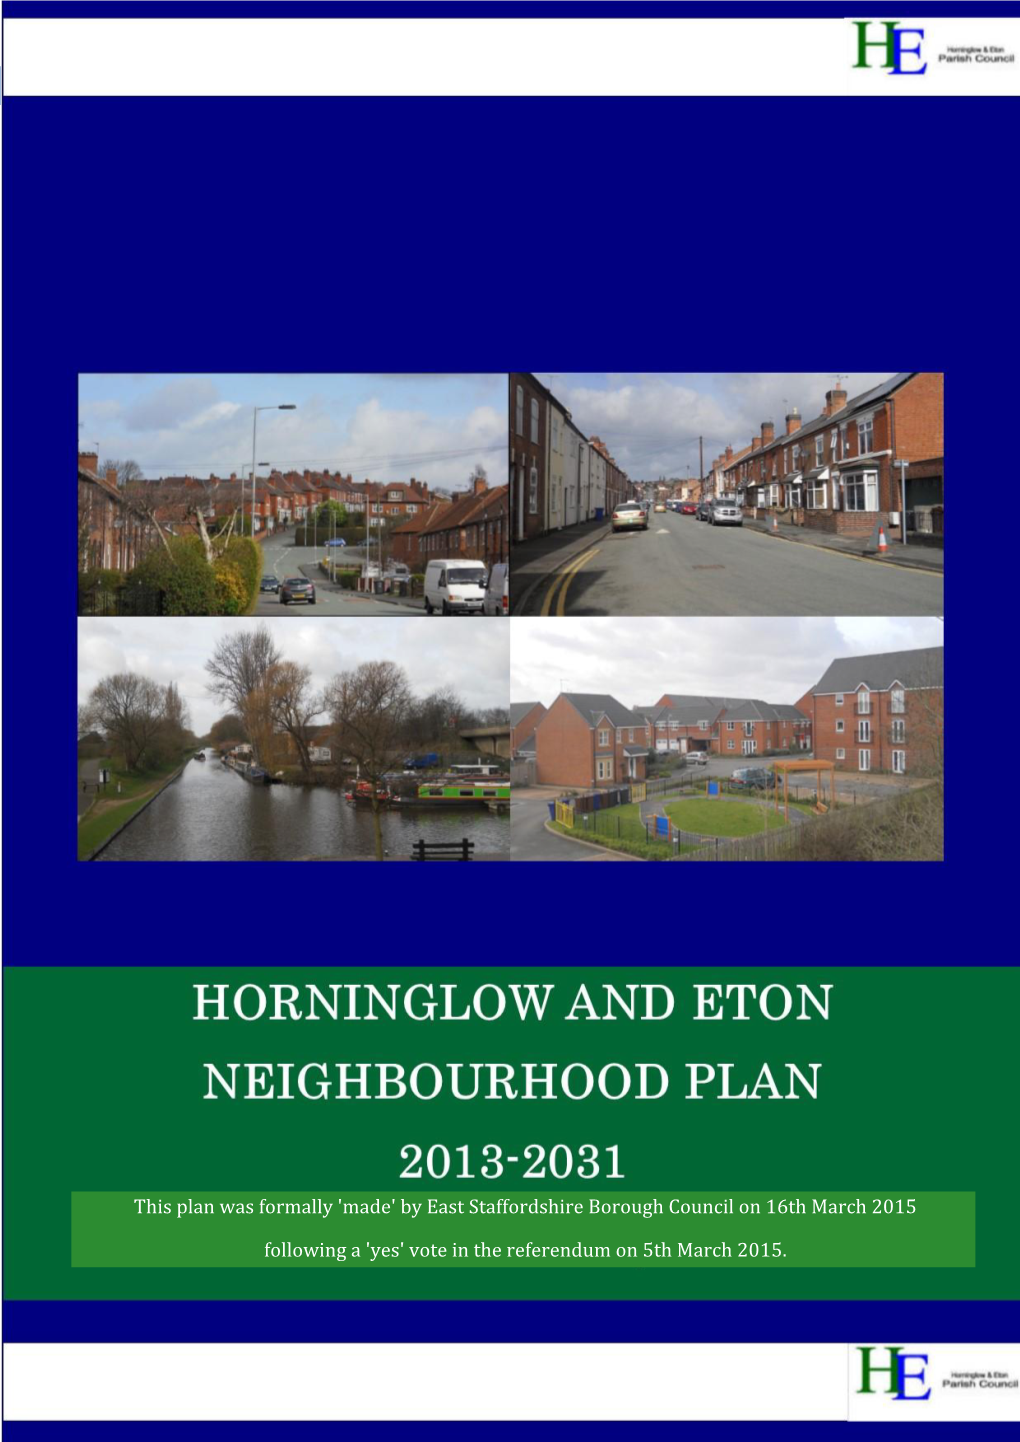 Horninglow and Eton Submission Neighbourhood Development Plan